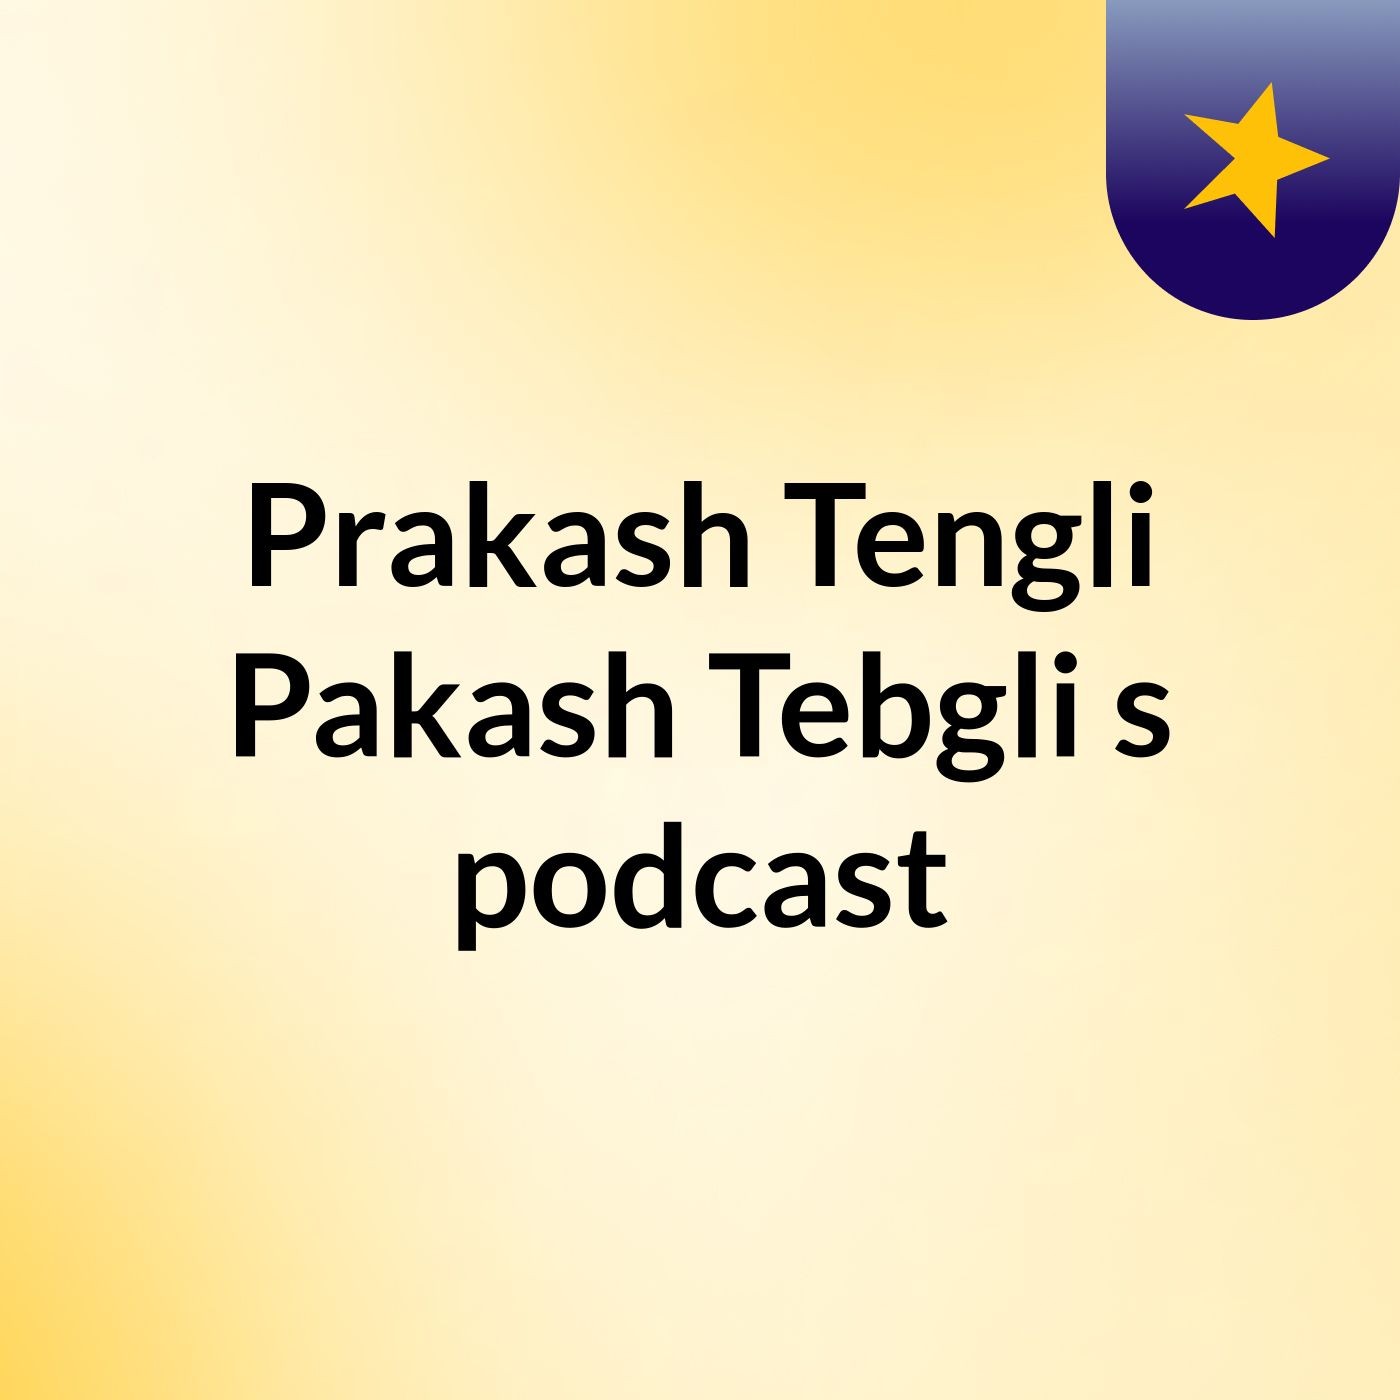 Prakash Tengli Pakash Tebgli's podcast